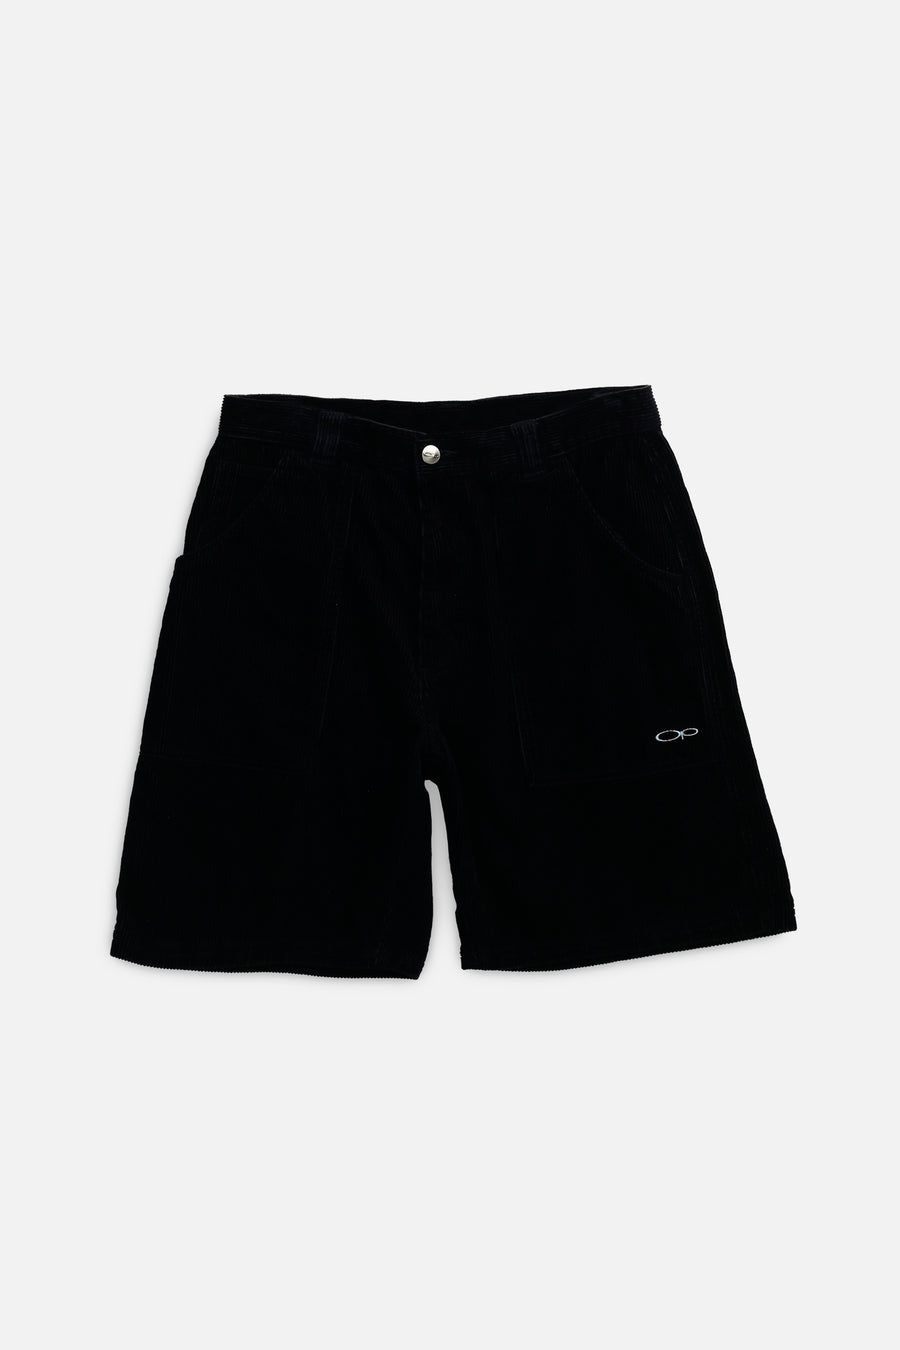 Vintage Op Corduroy Shorts - W30